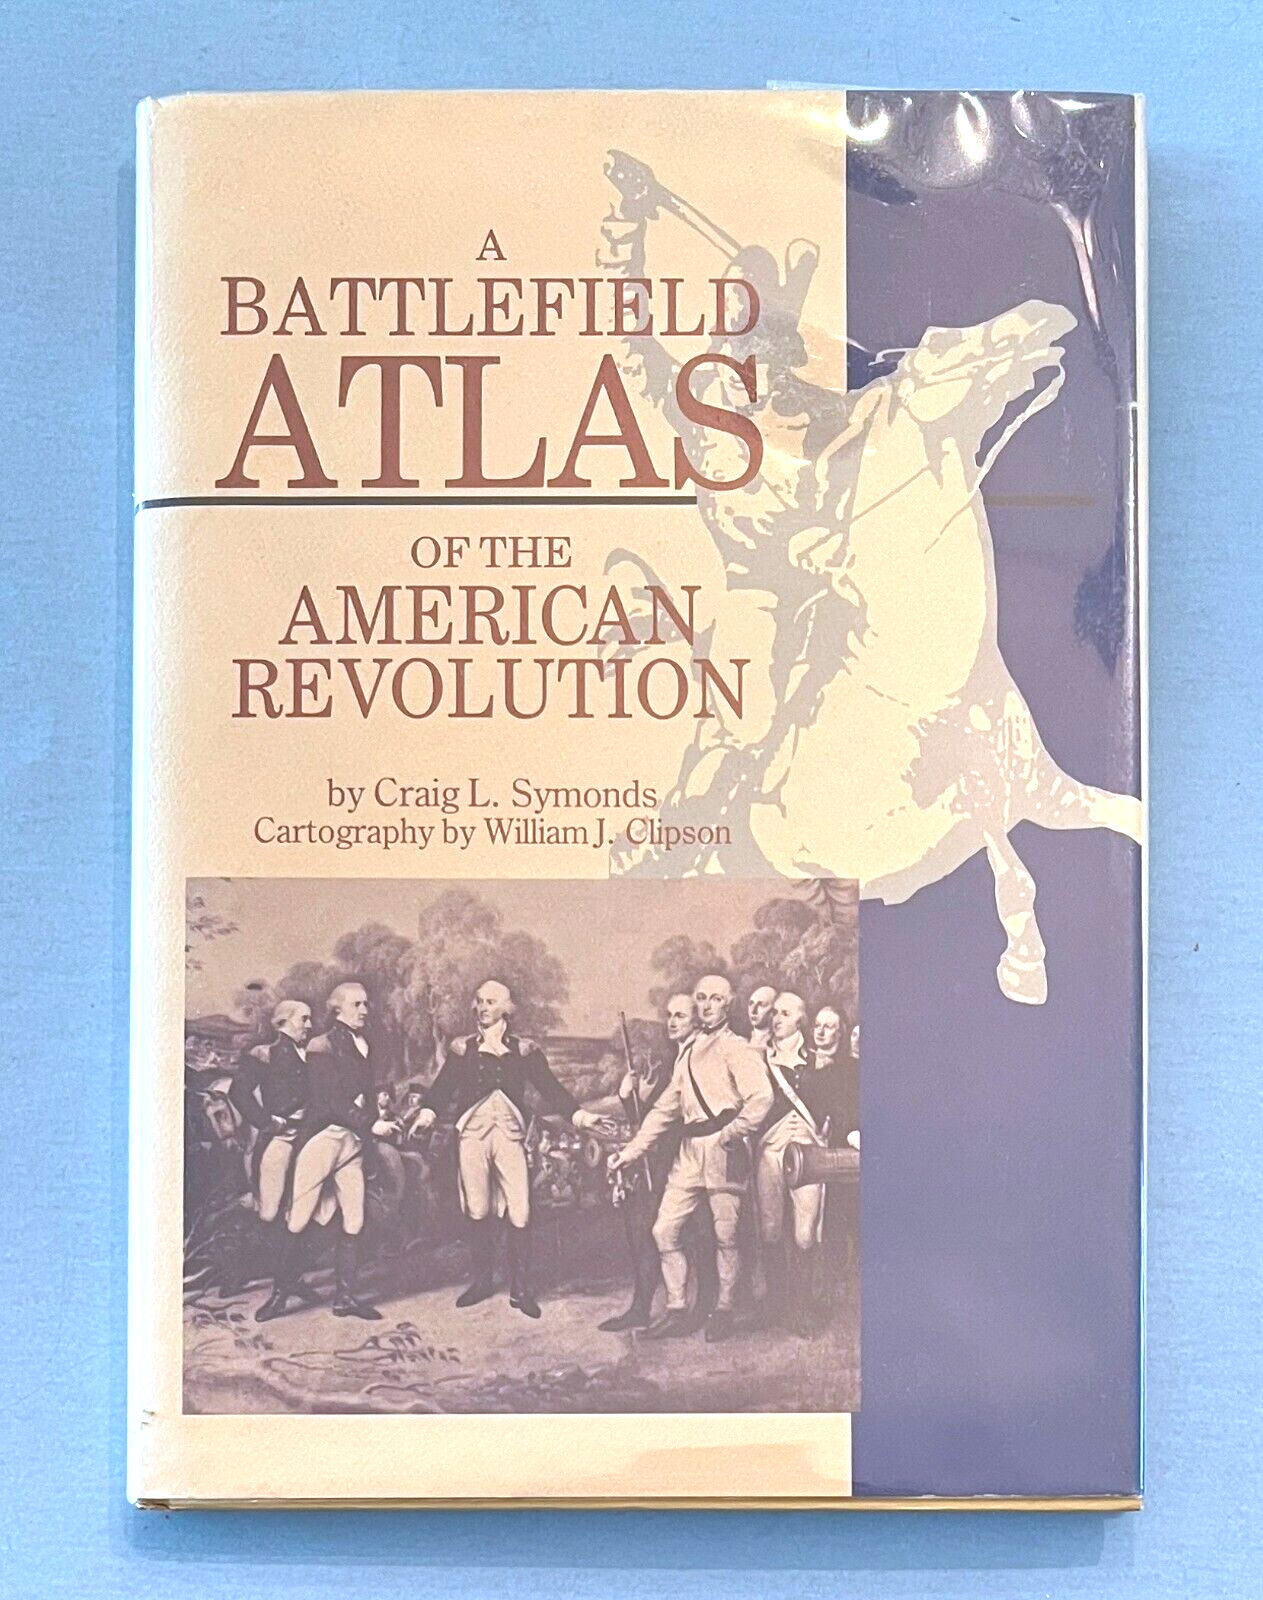 A Battlefield Atlas of the American Revolution, 1998 by Craig L. Symonds